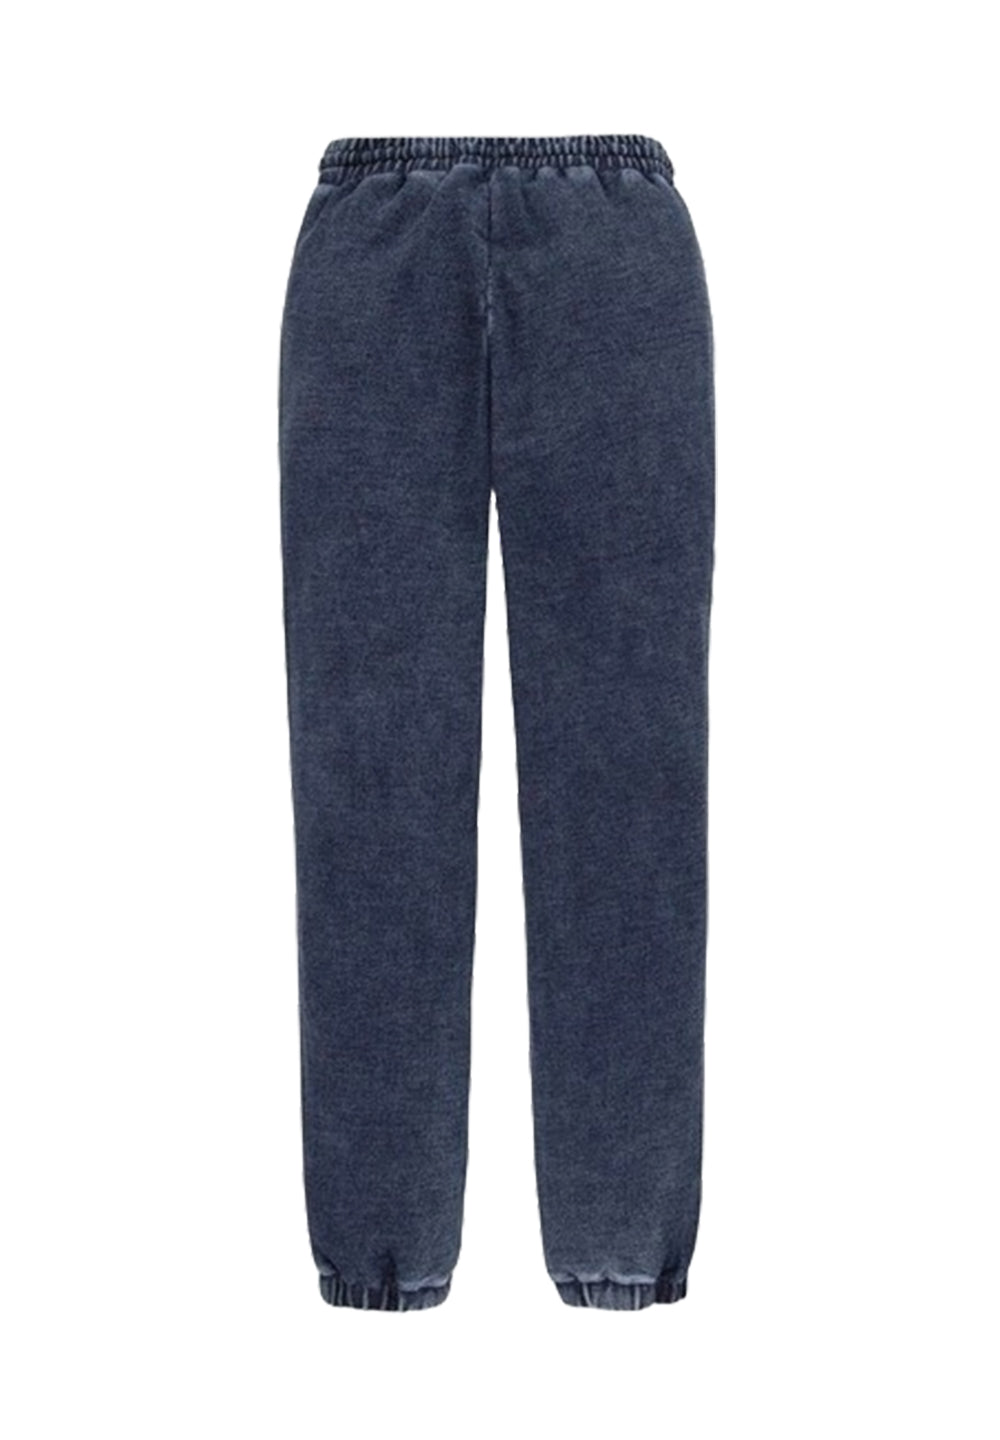 Blue denim sweatpants for boys